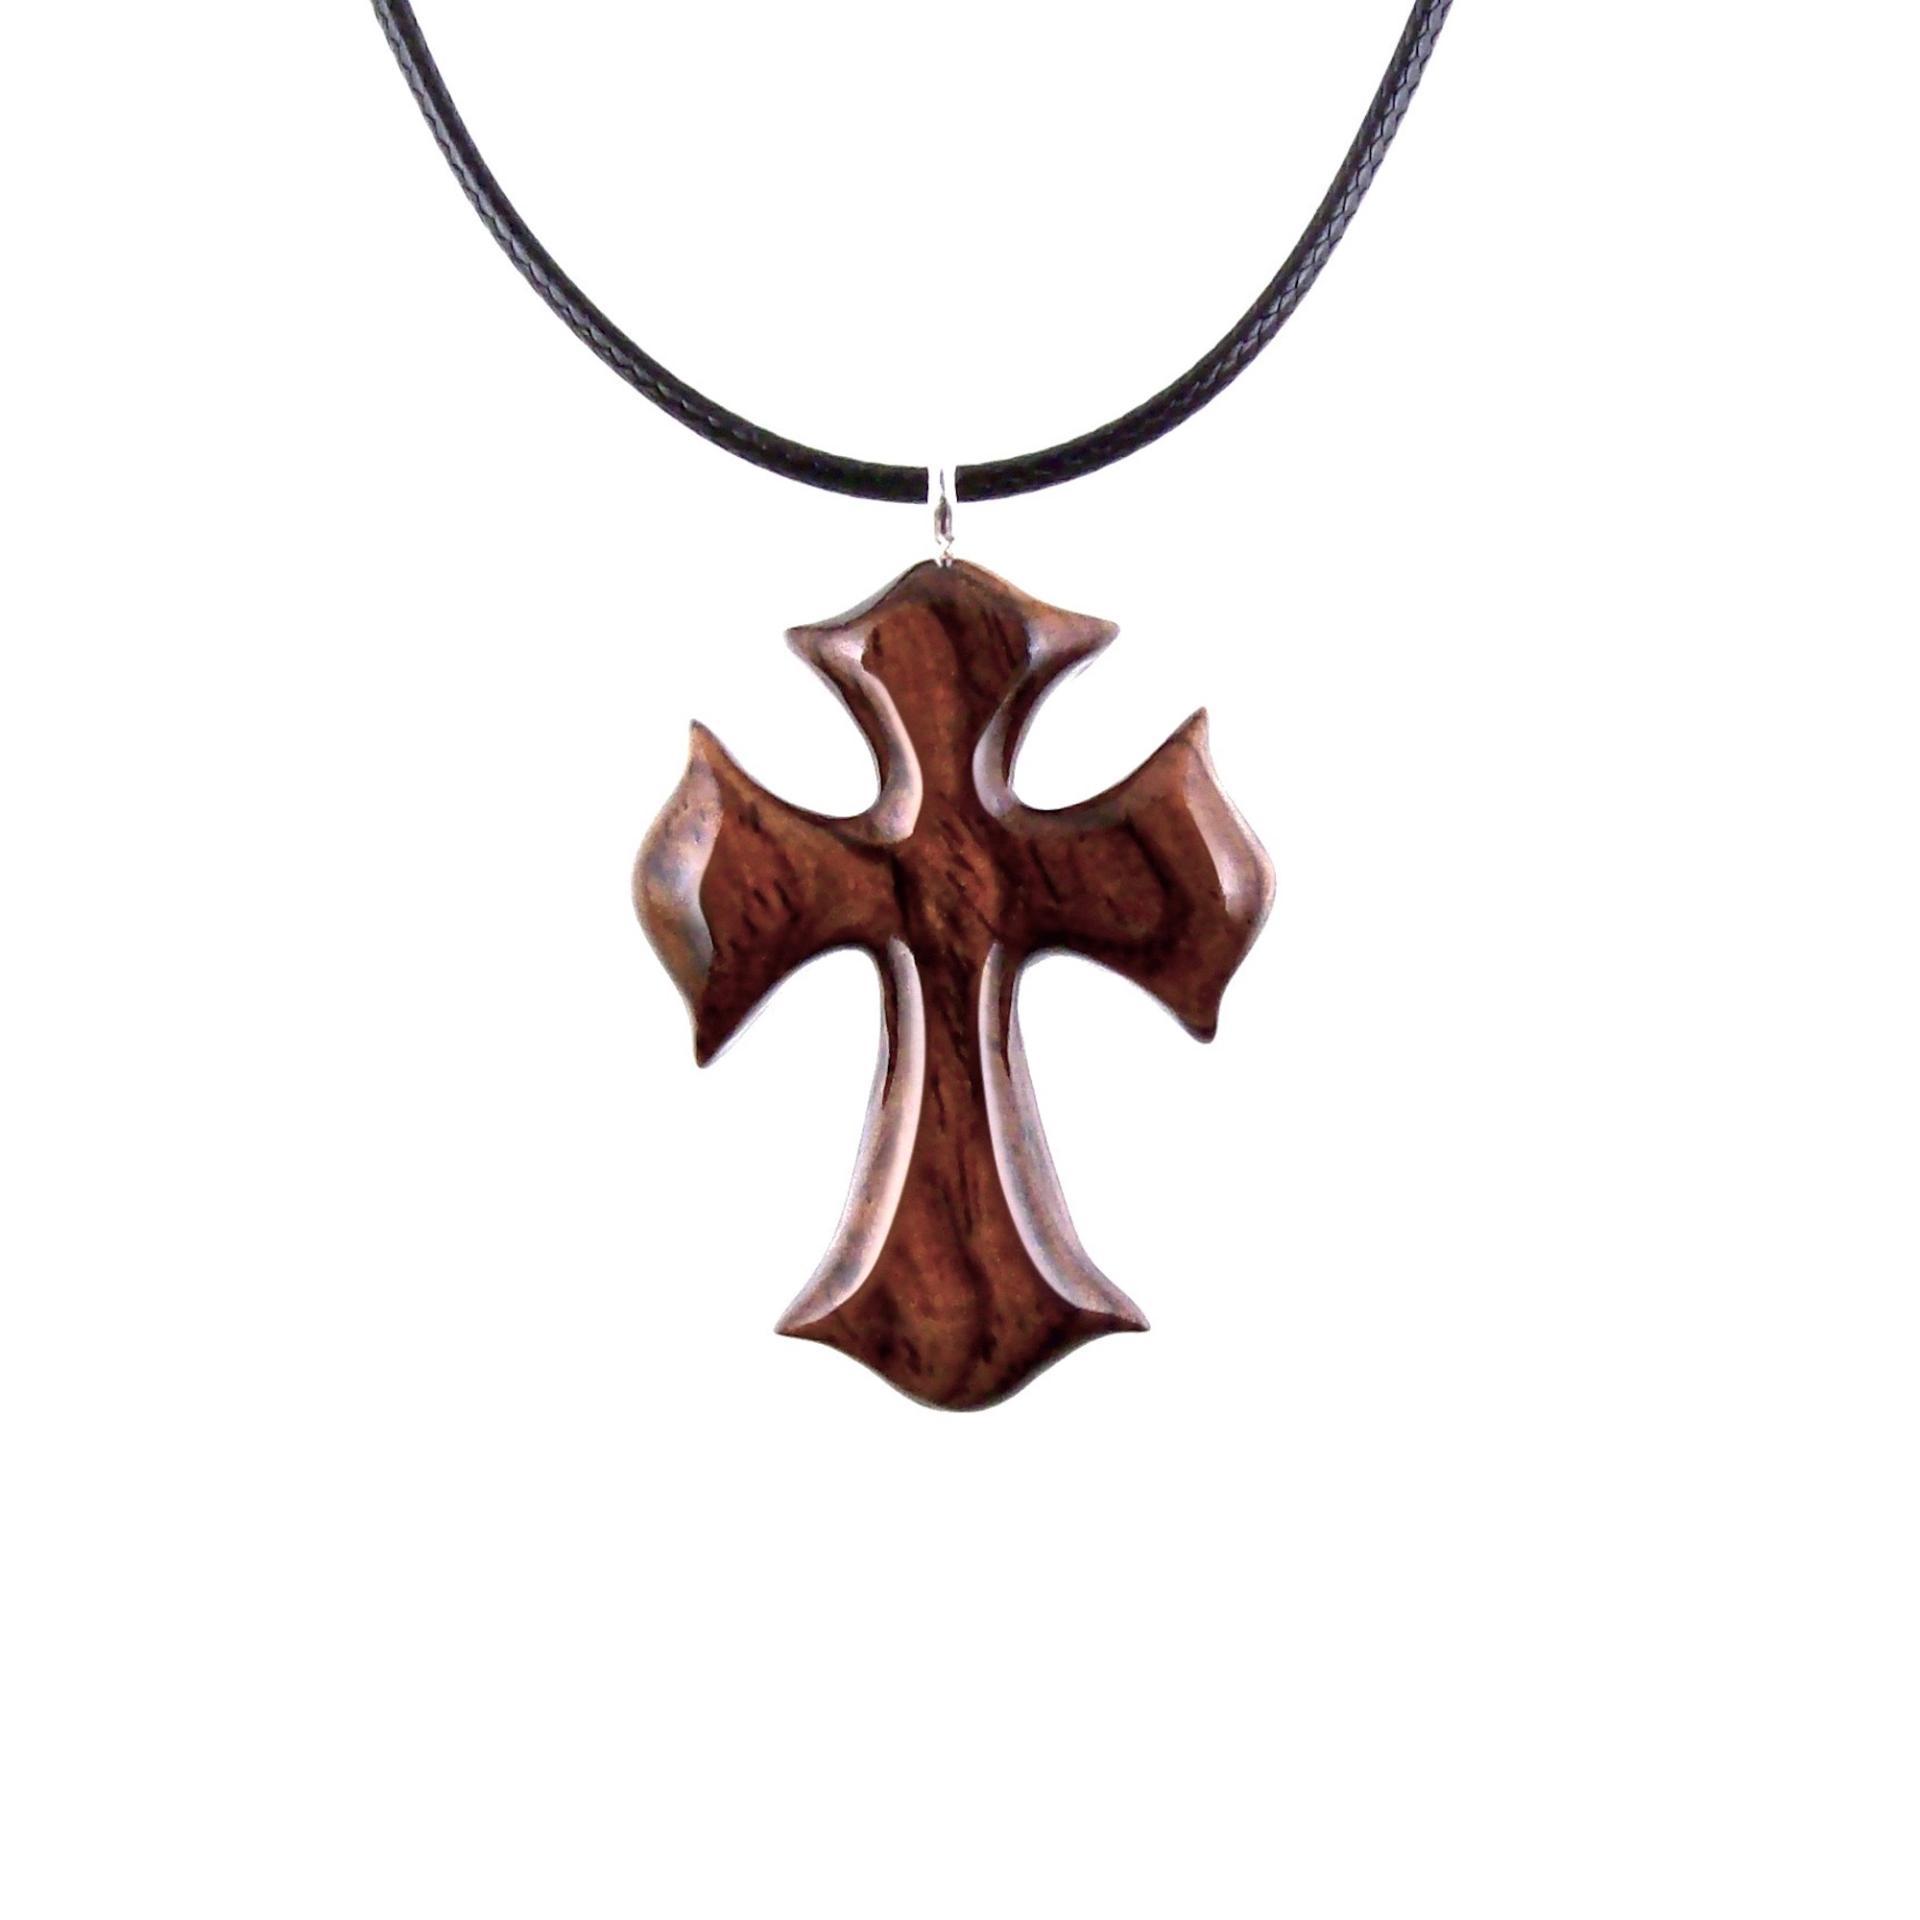 Assorted Wooden Cross Necklaces 24